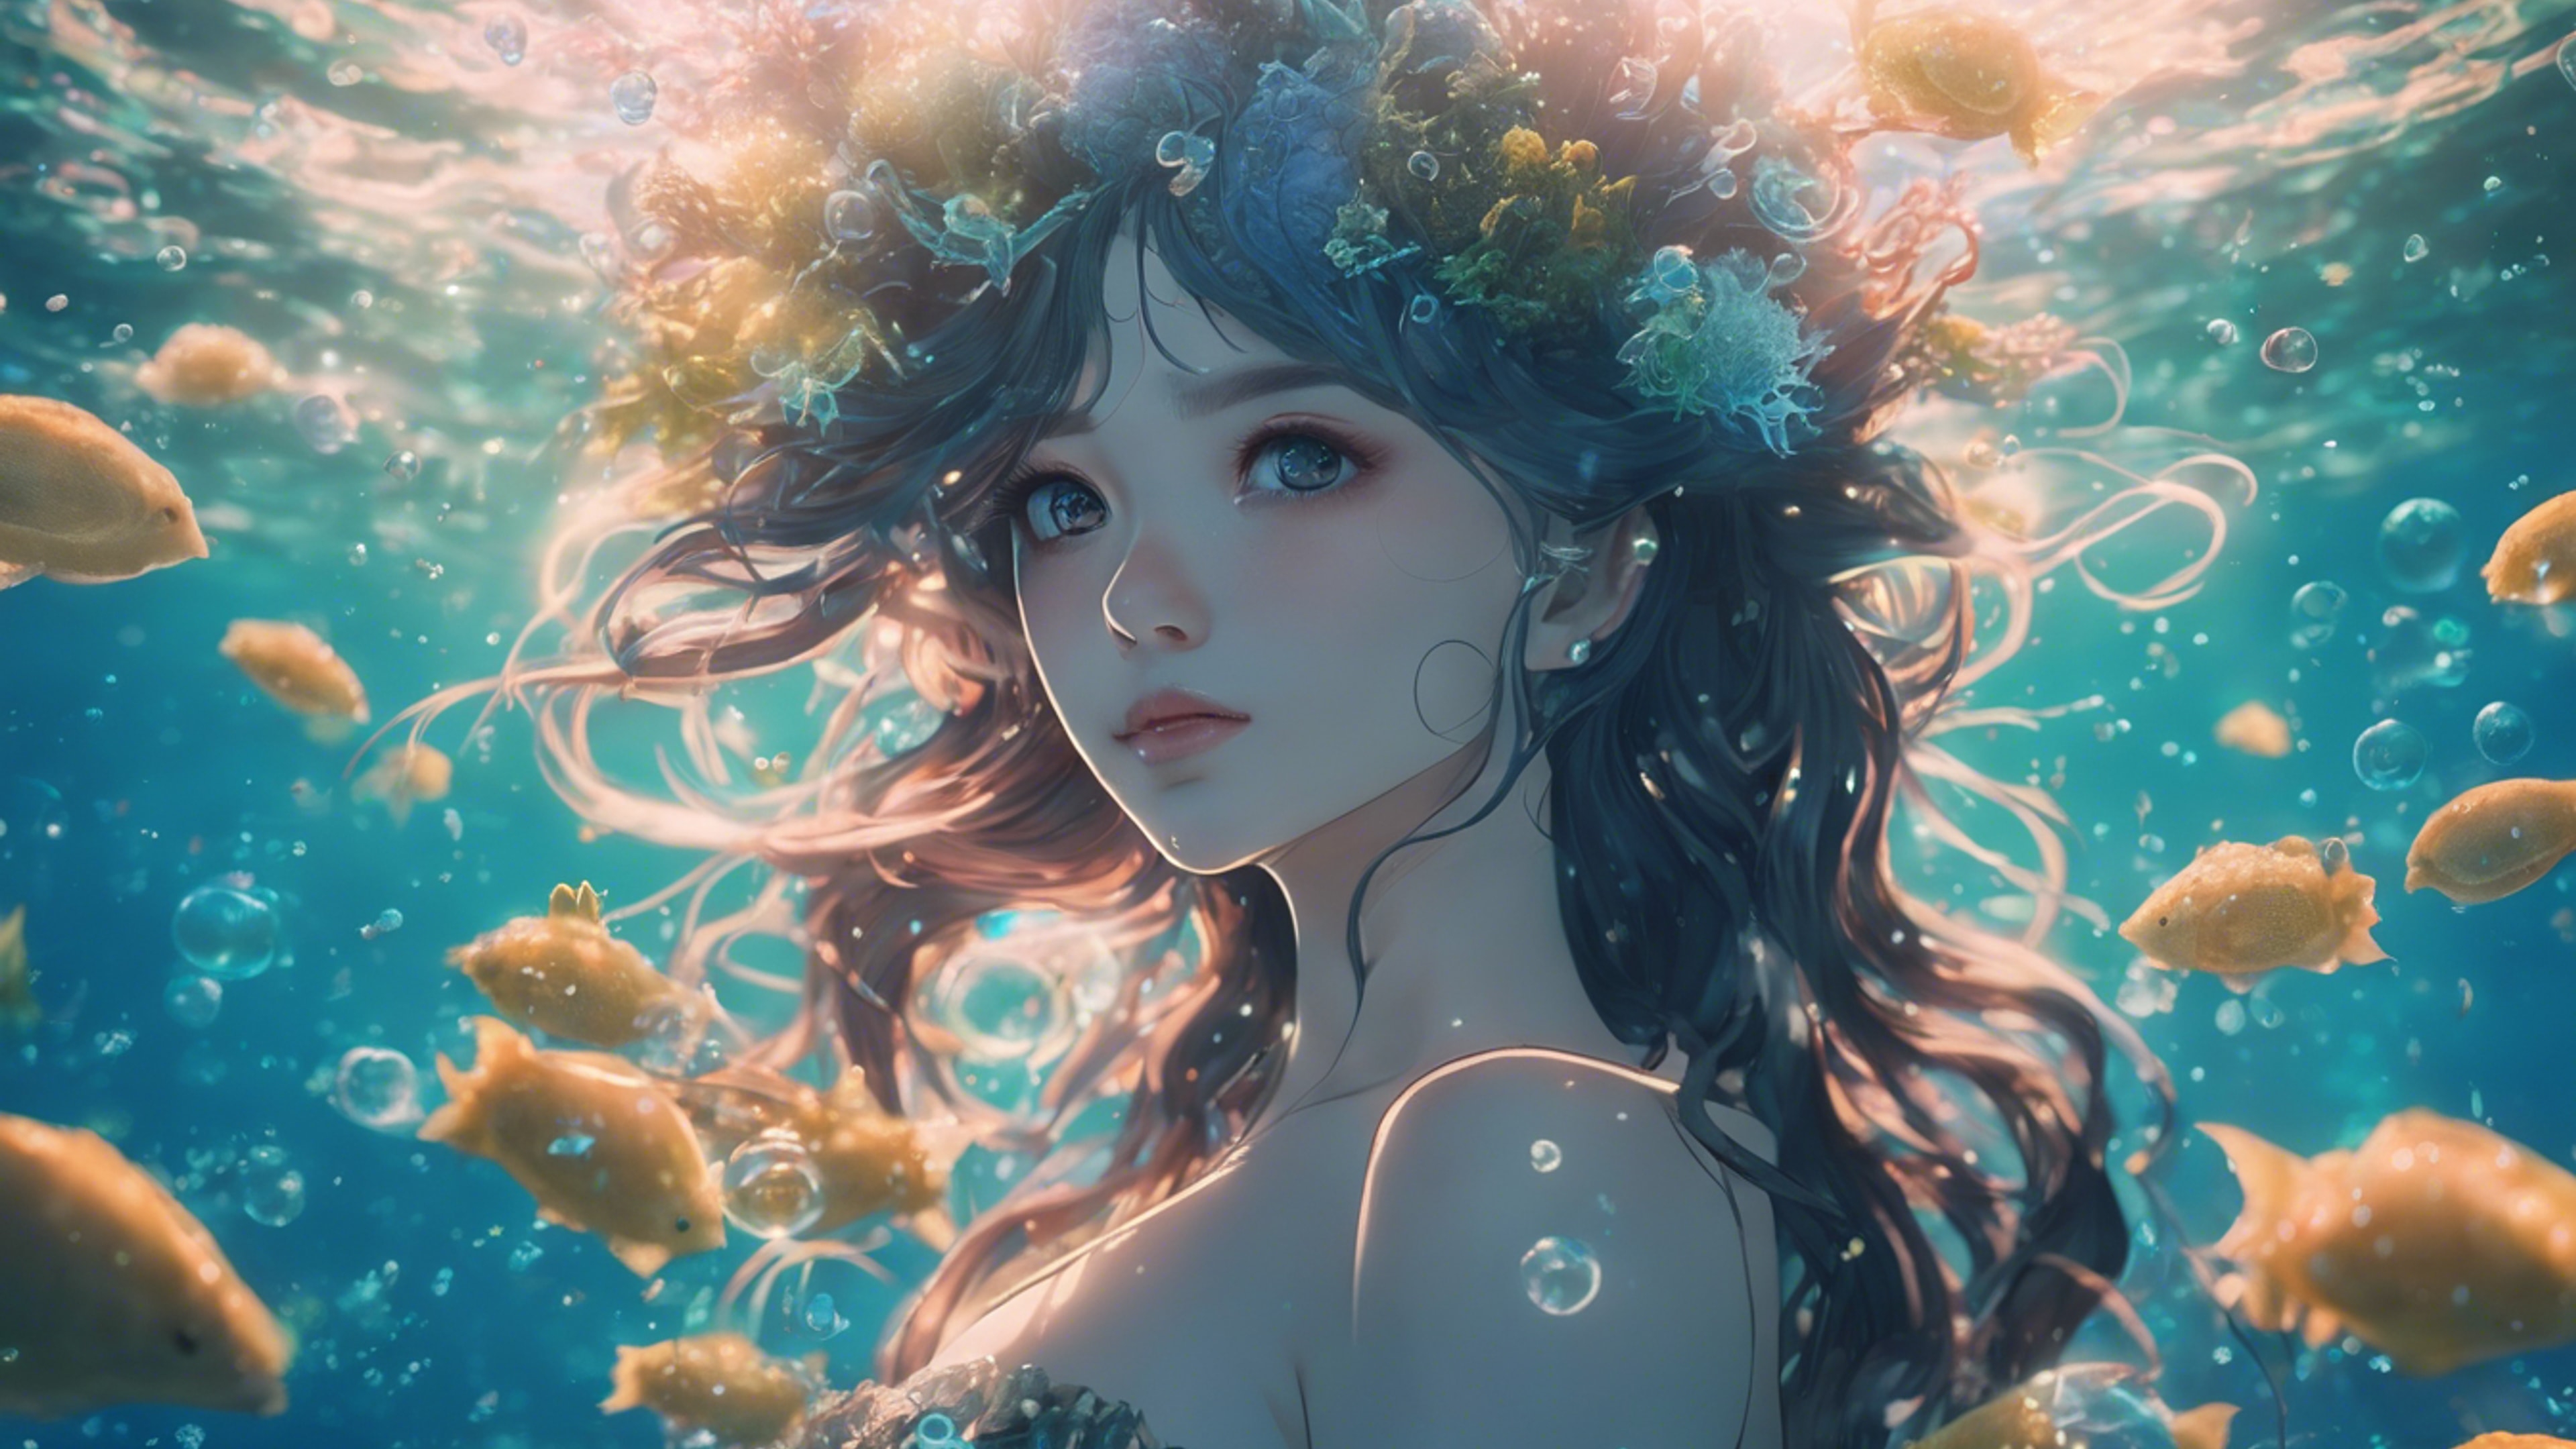 Anime-inspired underwater mermaid kingdom glittering with bioluminescent organisms.壁紙[b6d868a85fc94f08be6c]